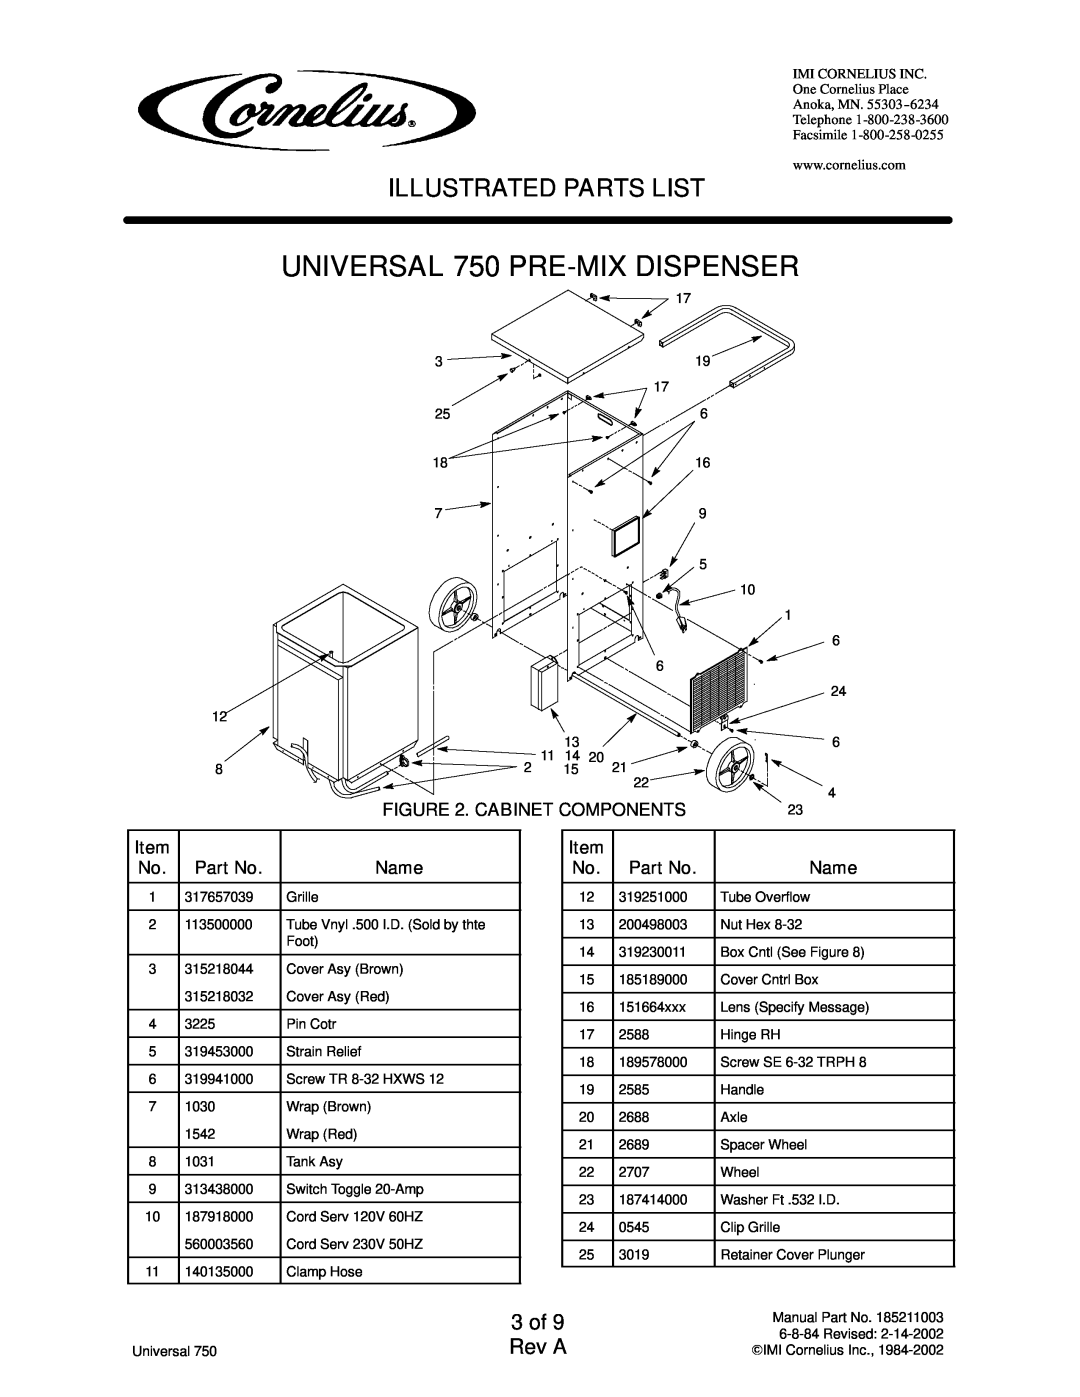 Cornelius 2849949xxx manual 3 of 9 Rev A, UNIVERSAL 750 PRE-MIXDISPENSER, Illustrated Parts List, Cabinet Components, Name 